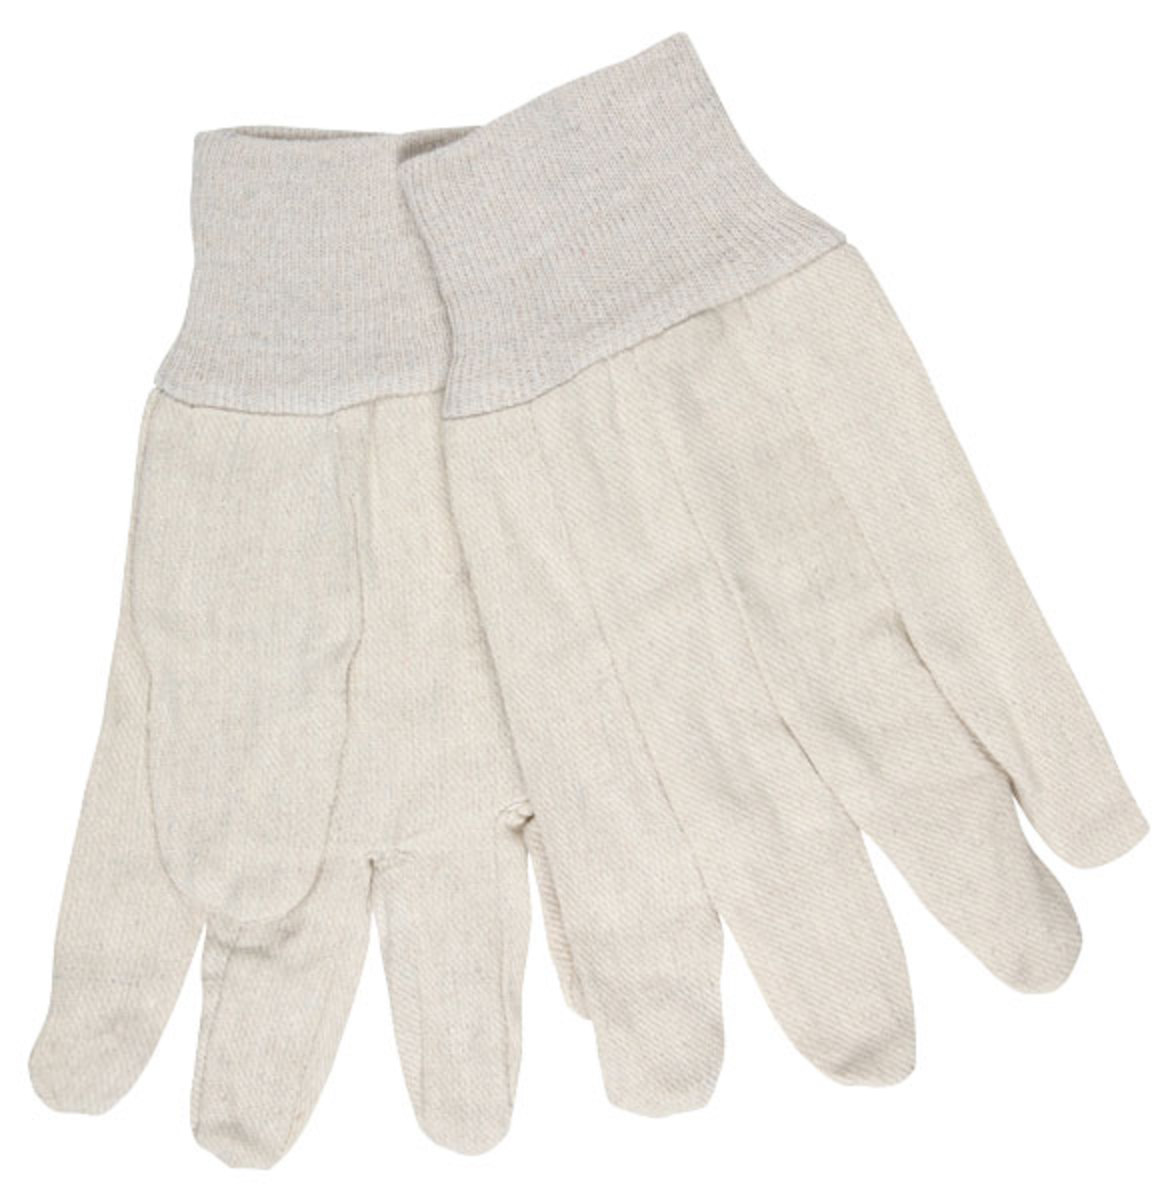 Memphis Glove Natural Large 8 oz Cotton Canvas Clute Cut Work Gloves With Knit Wrist